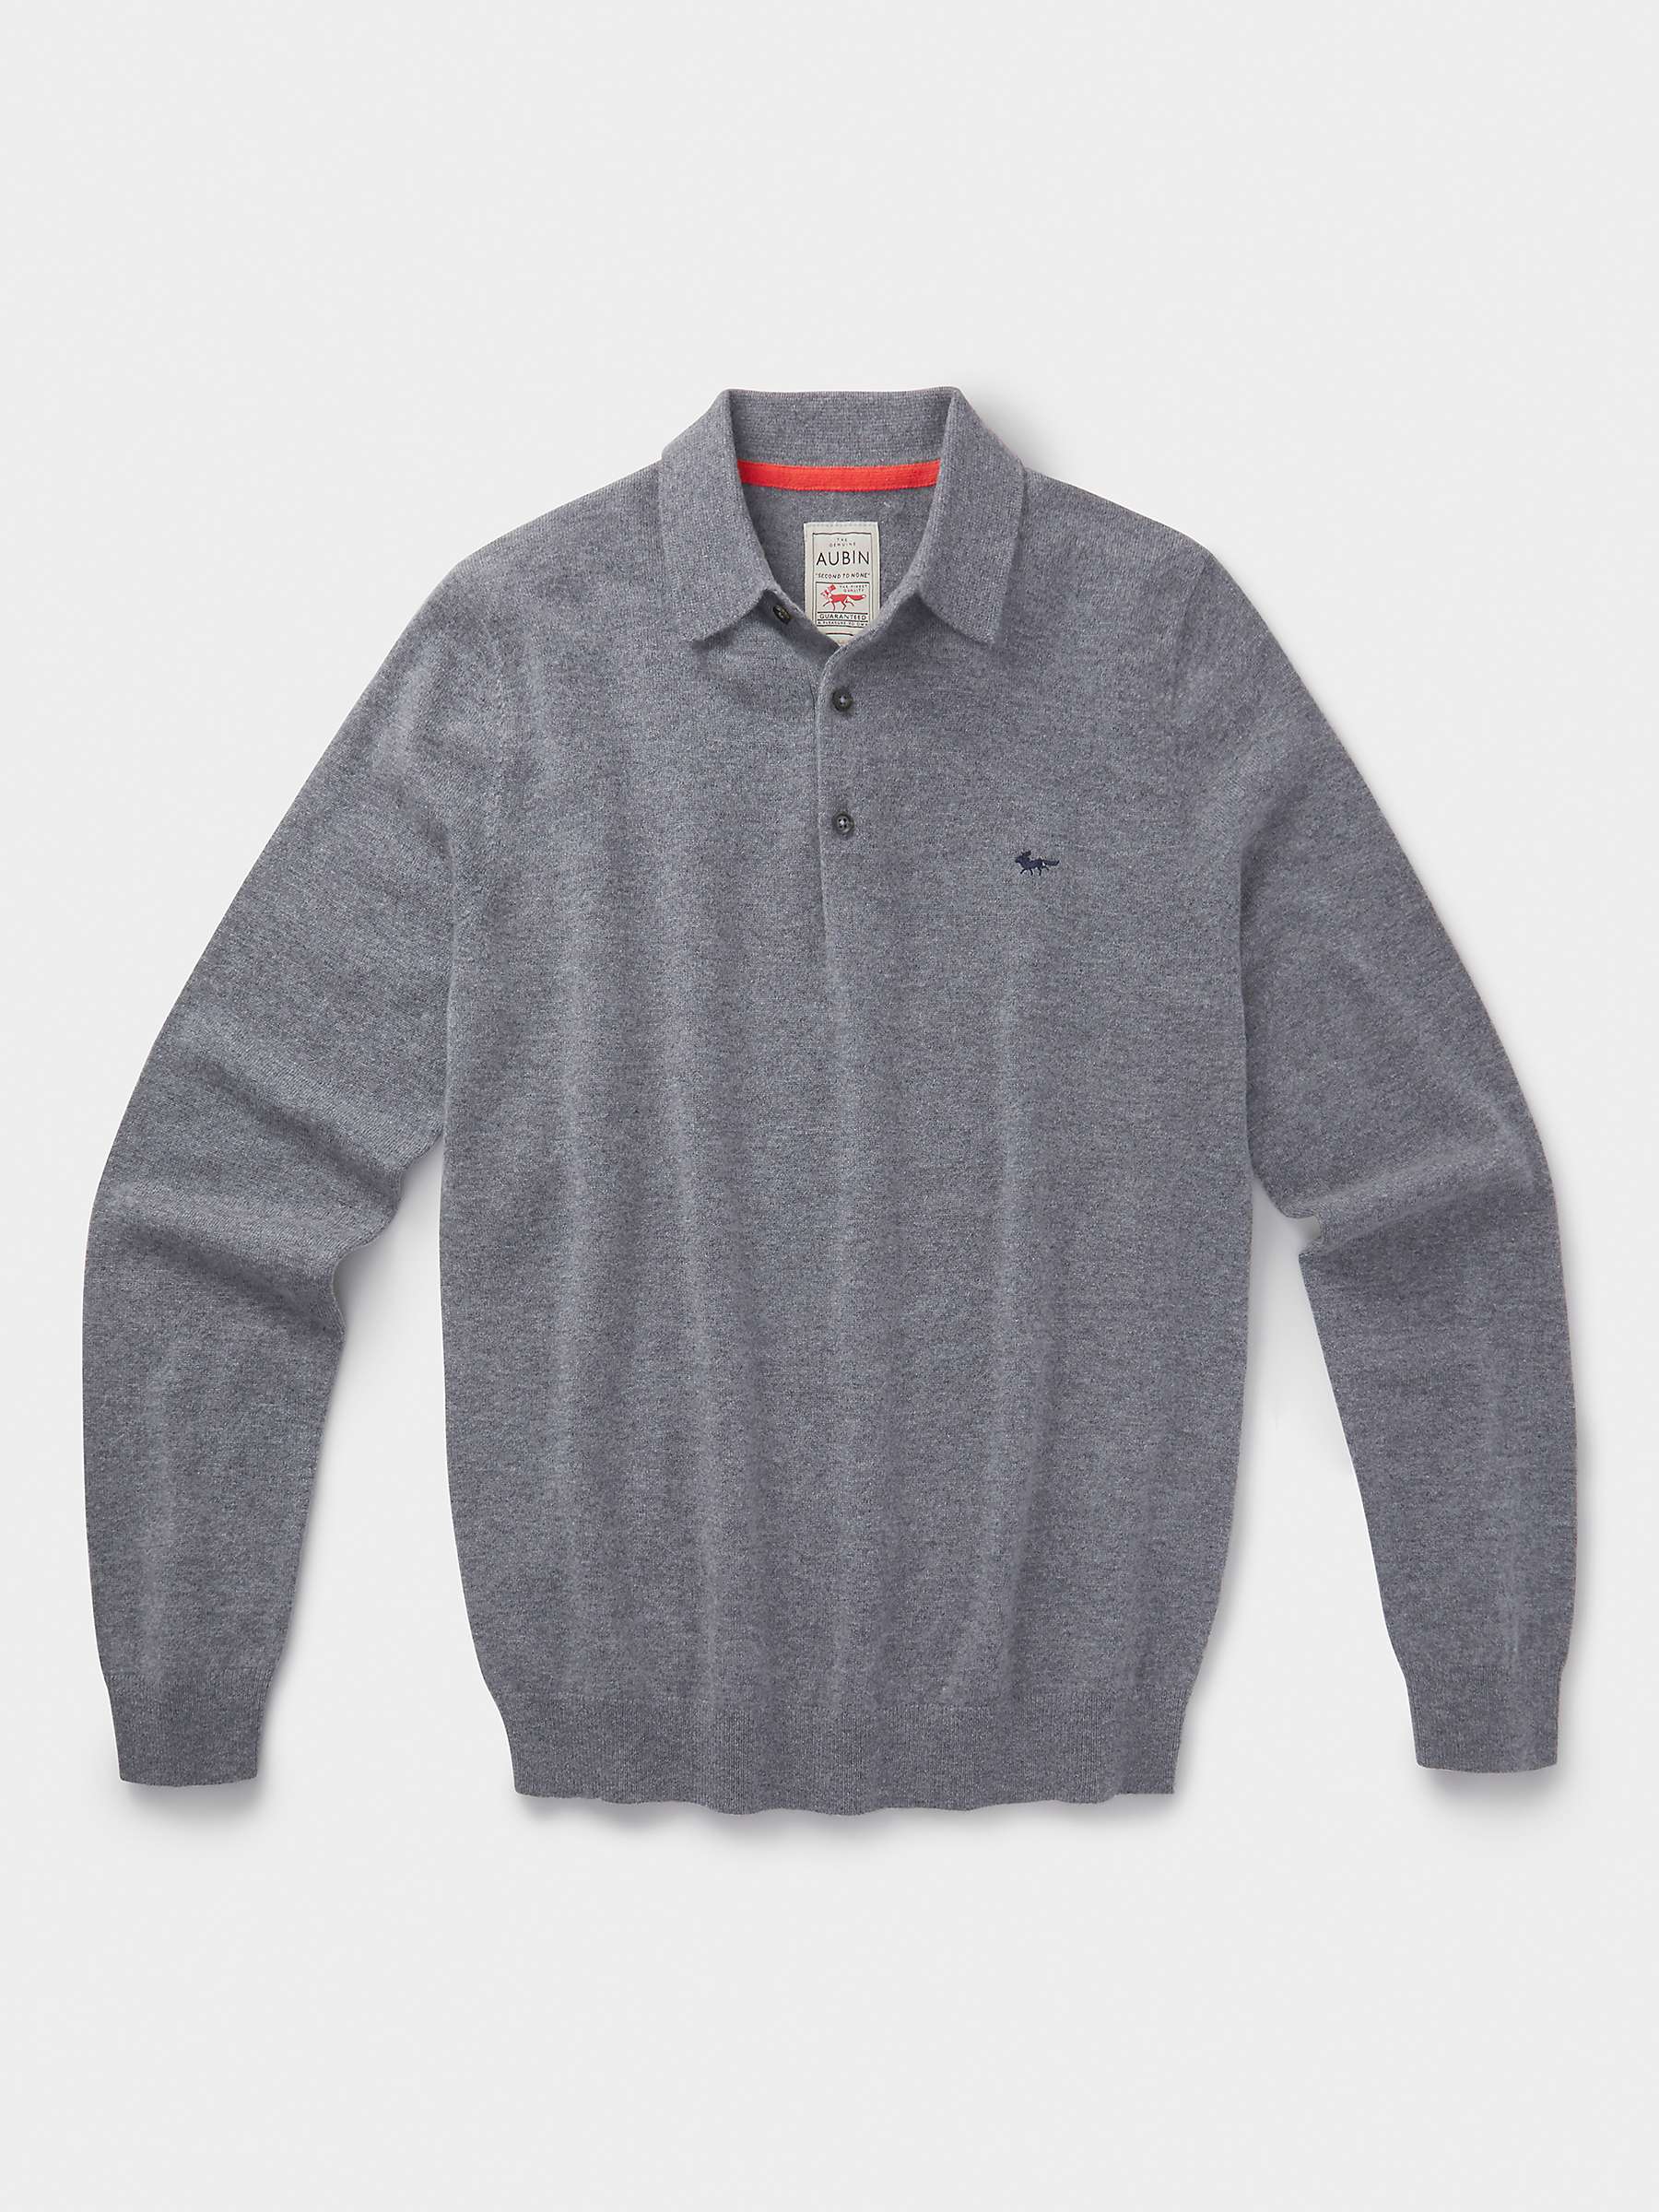 Buy Aubin Brampton Merino Wool & Cashmere Polo Shirt Online at johnlewis.com